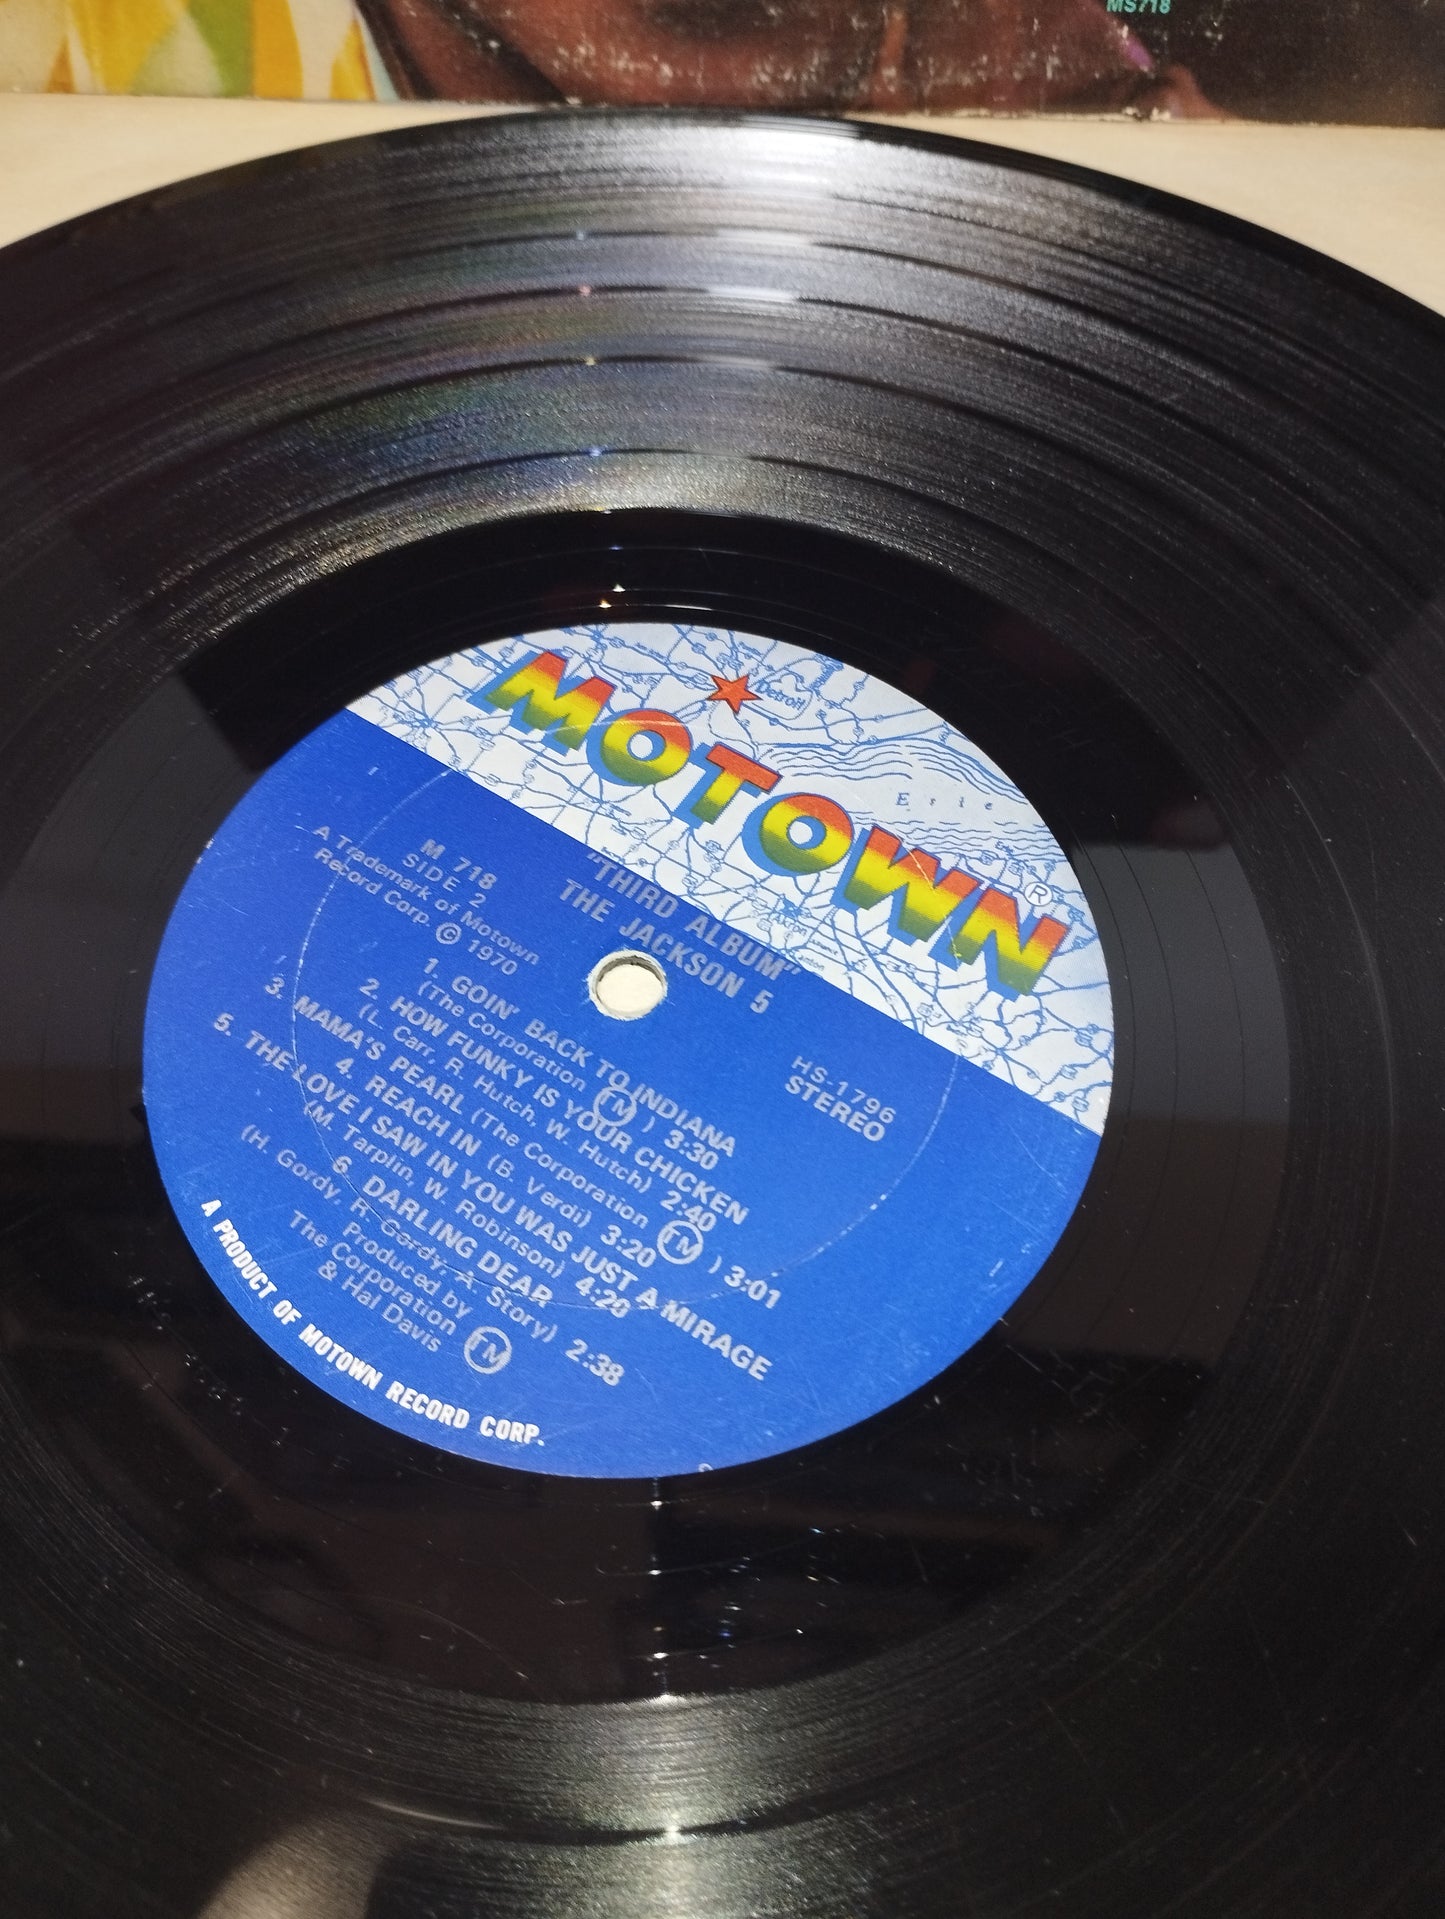 Third Album The Jackson 5 LP 33 Giri   Edito nel 1970 da Motown MS-718 Stereo